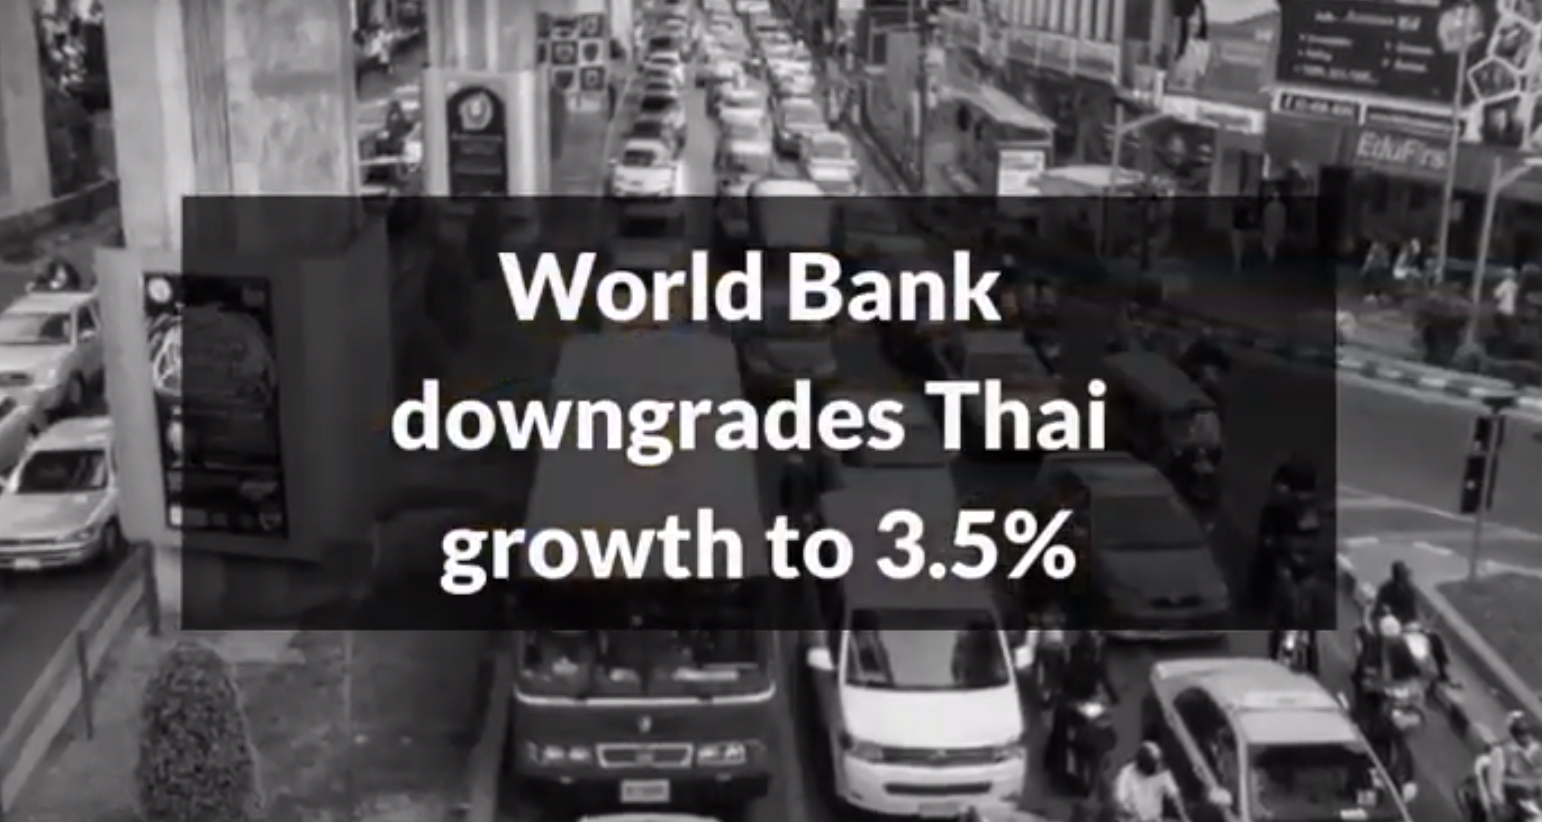 World Bank downgrades Thai growth to 3.5%